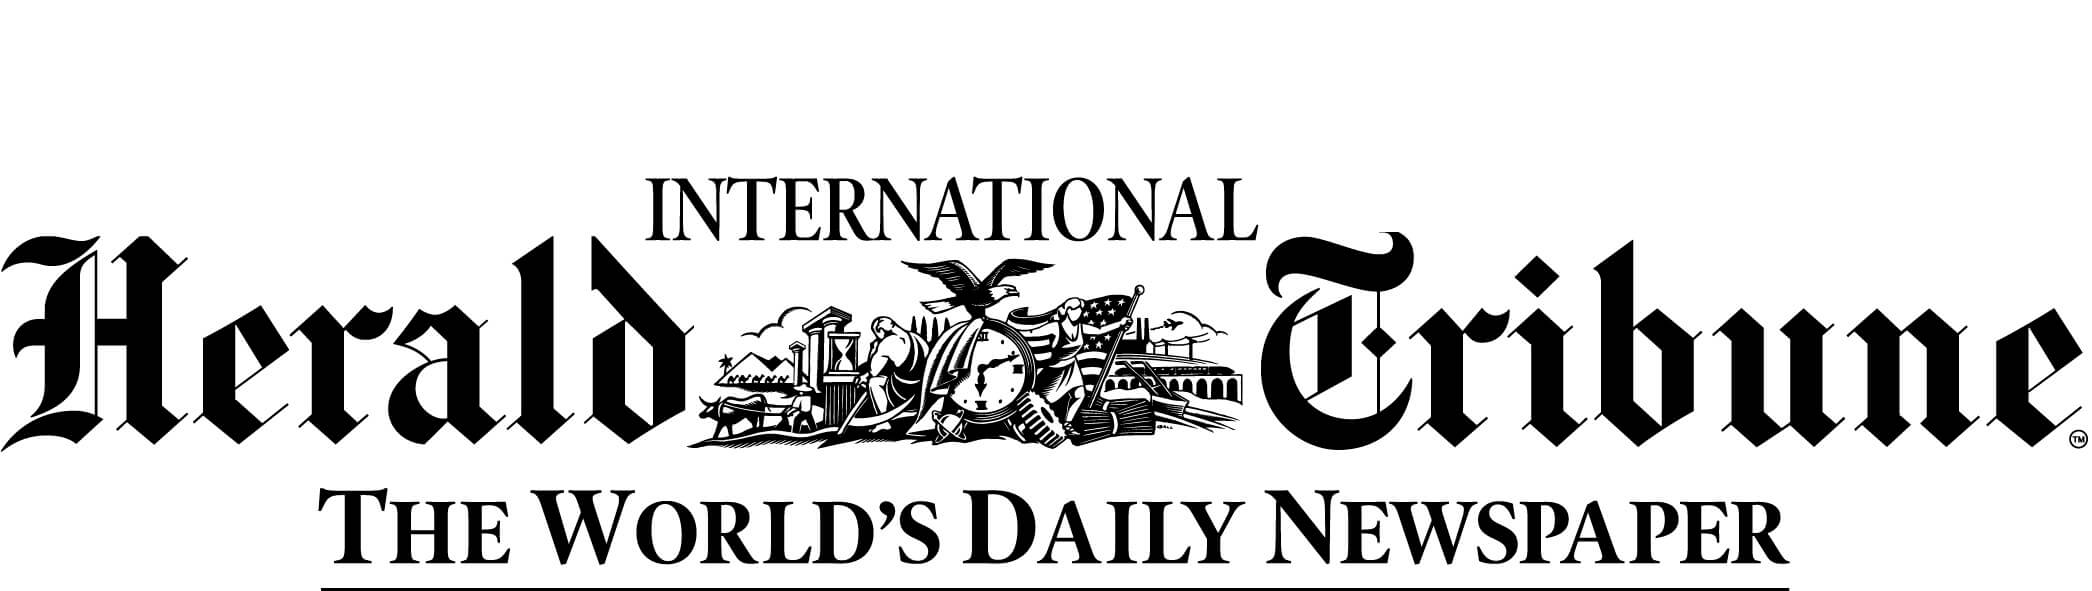 Herald Tribune logo